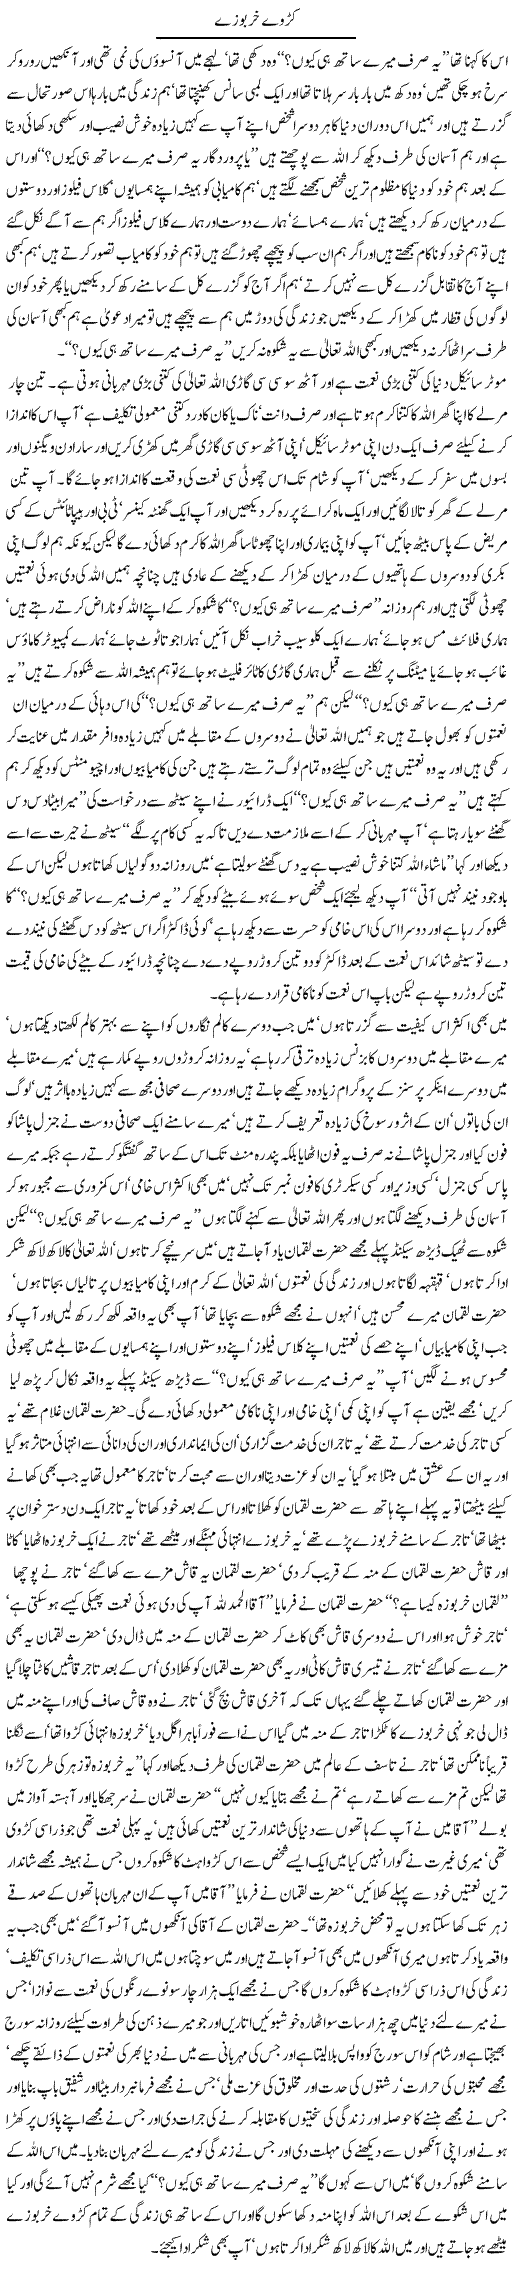 Interesting Story Express Column Javed Chaudhry 20 November 2011